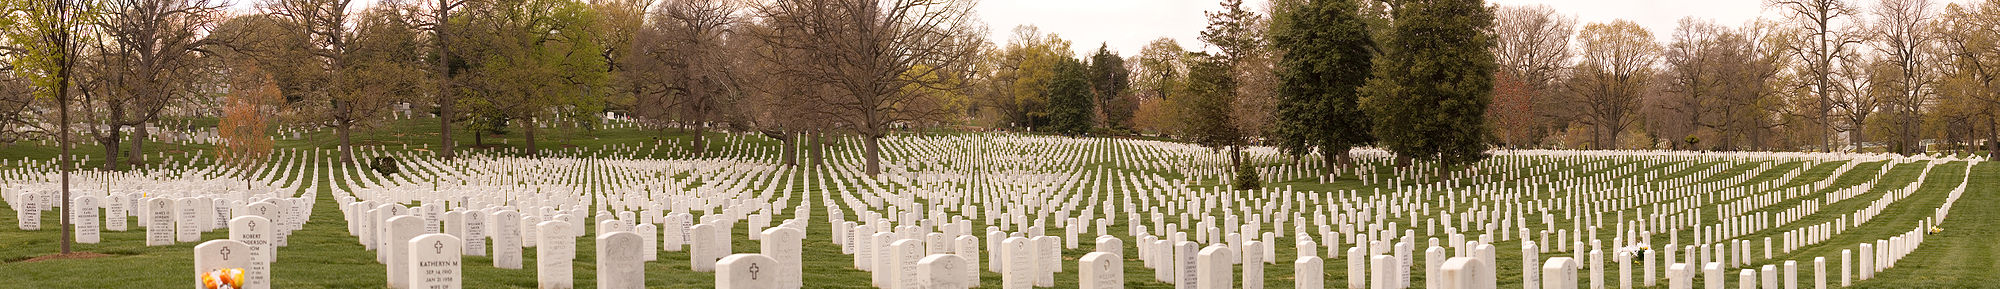 Panorama einer Sektion des Arlington National Cemetery